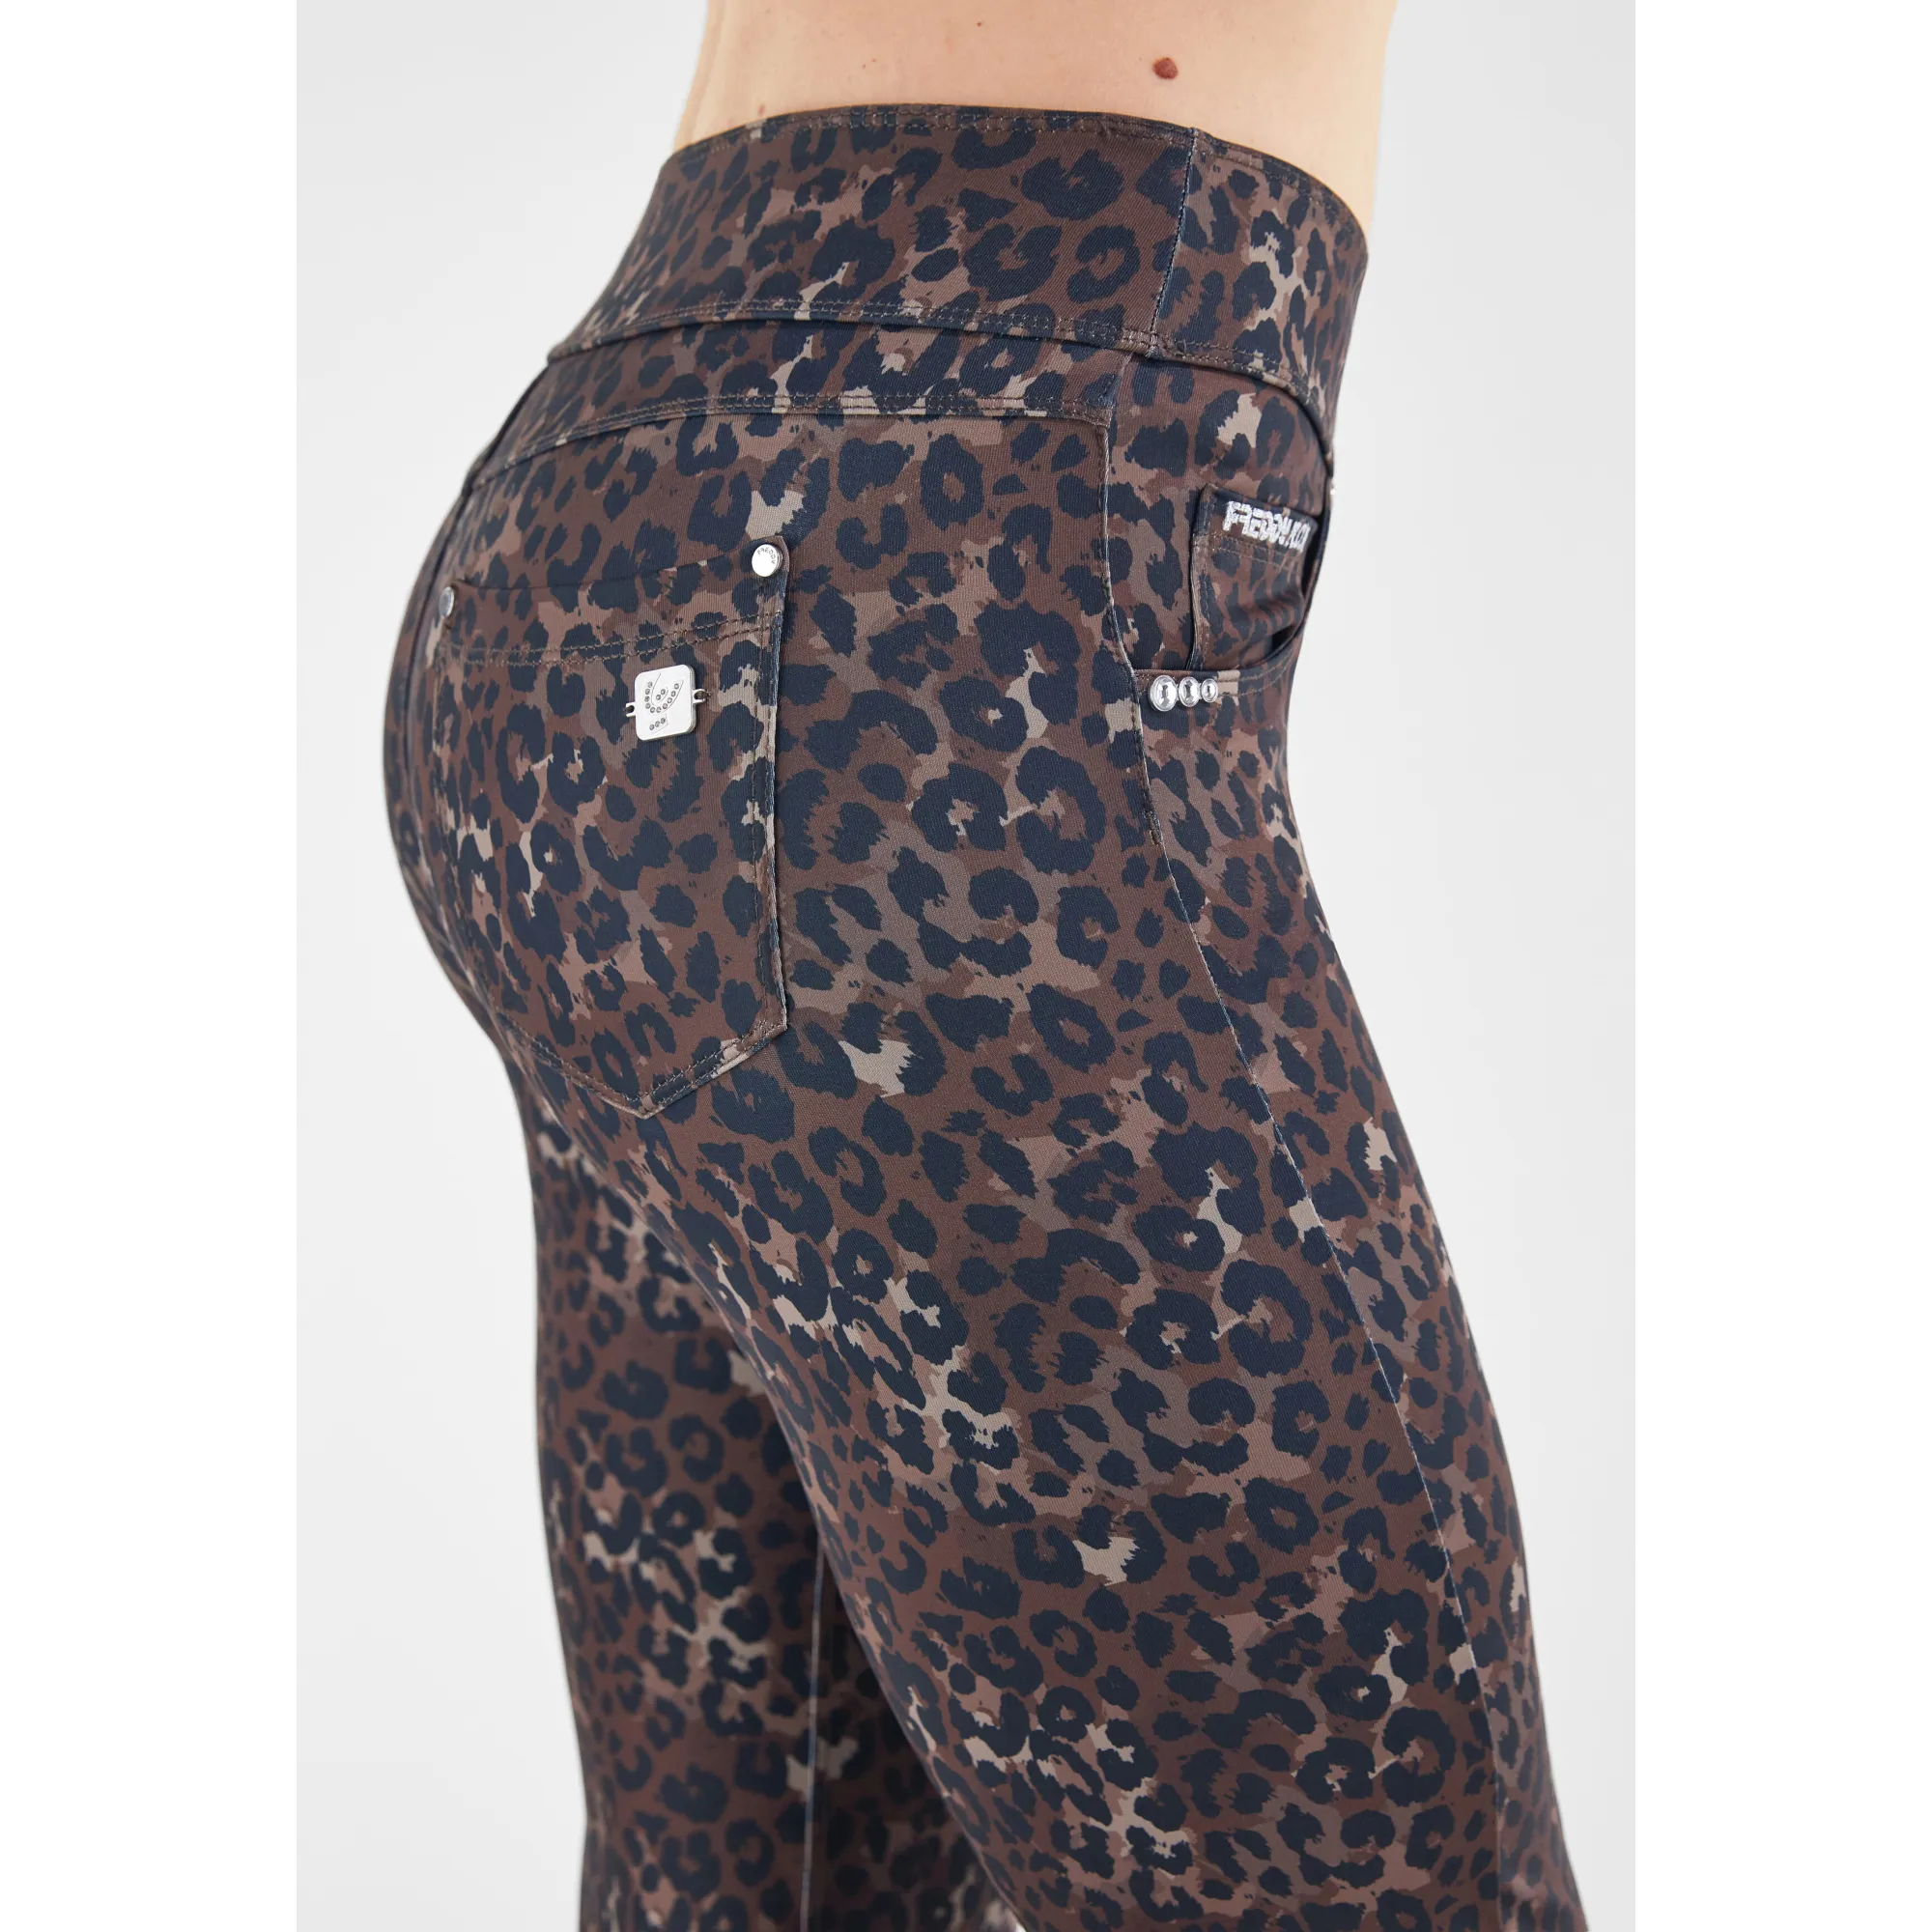 Wide Braun Yoga Hose - - Freddy Taillenbund Tech umschlagbarer - Leg Damen N.O.W.® - Comfort Mid Waist Leoparden-